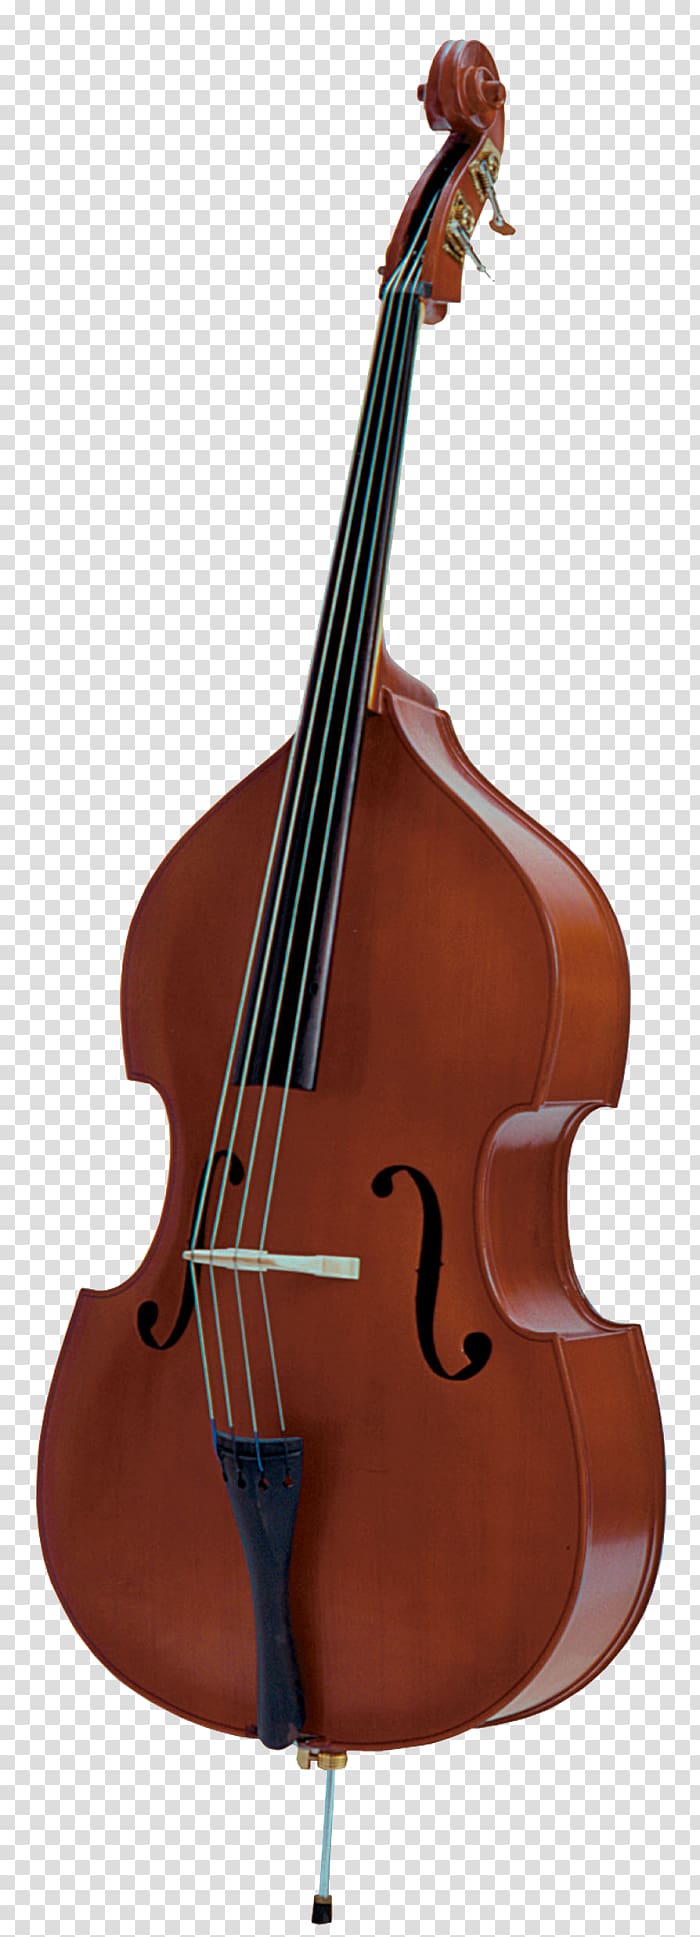 Double bass Cello Musical Instruments Bass guitar, String Bass s - Clip ...